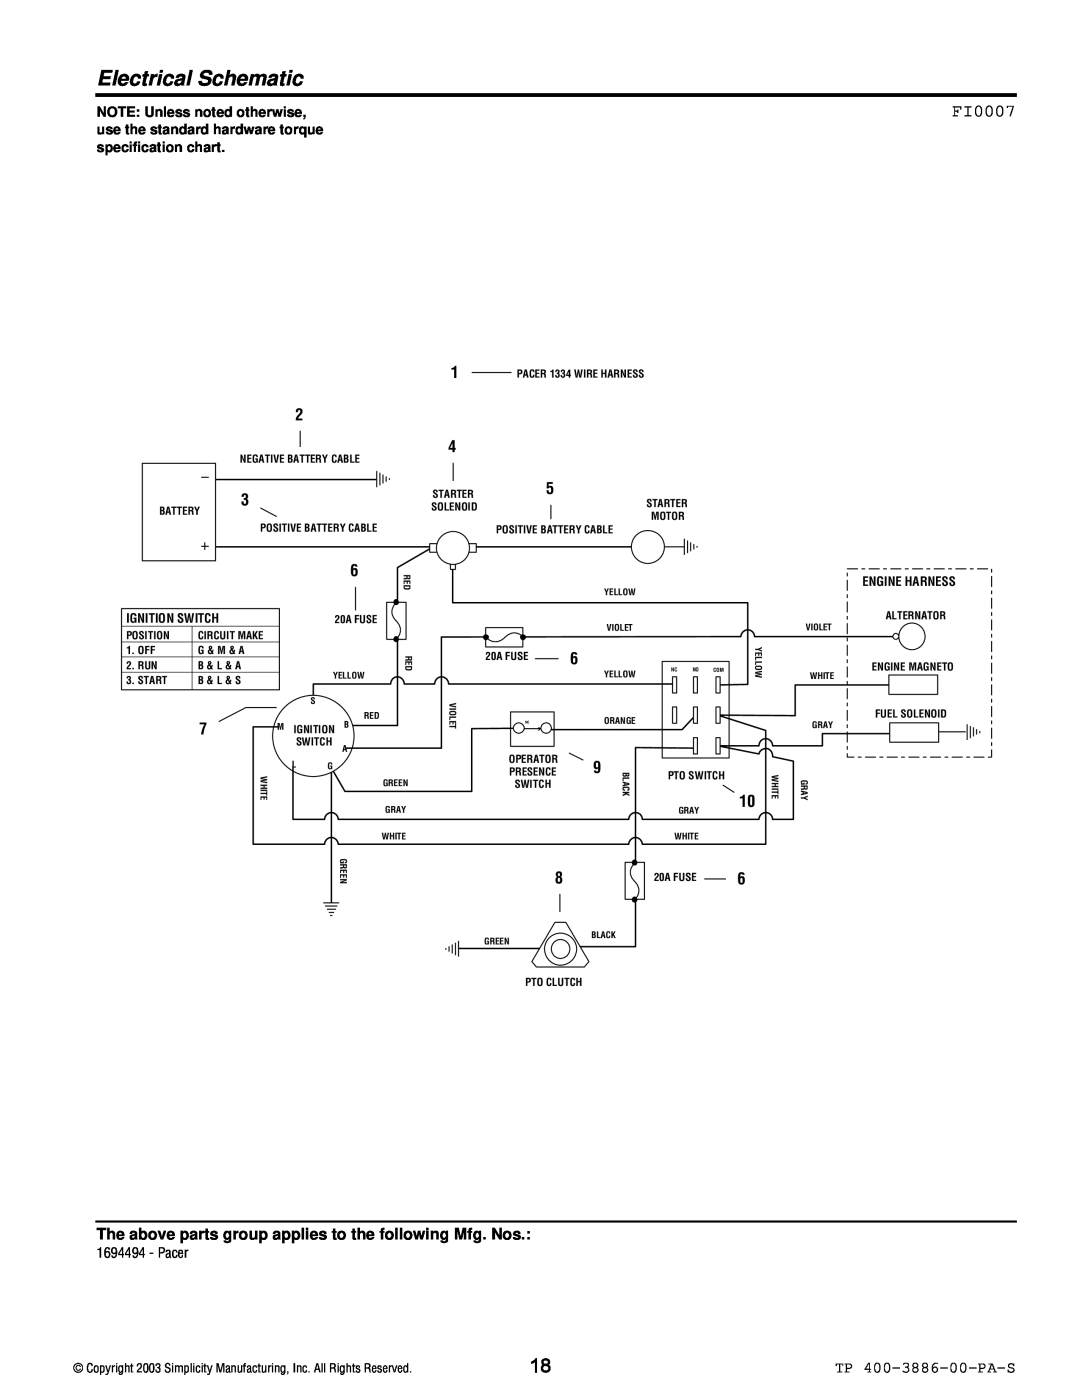 Simplicity Series Transaxle manual Electrical Schematic, FI0007 